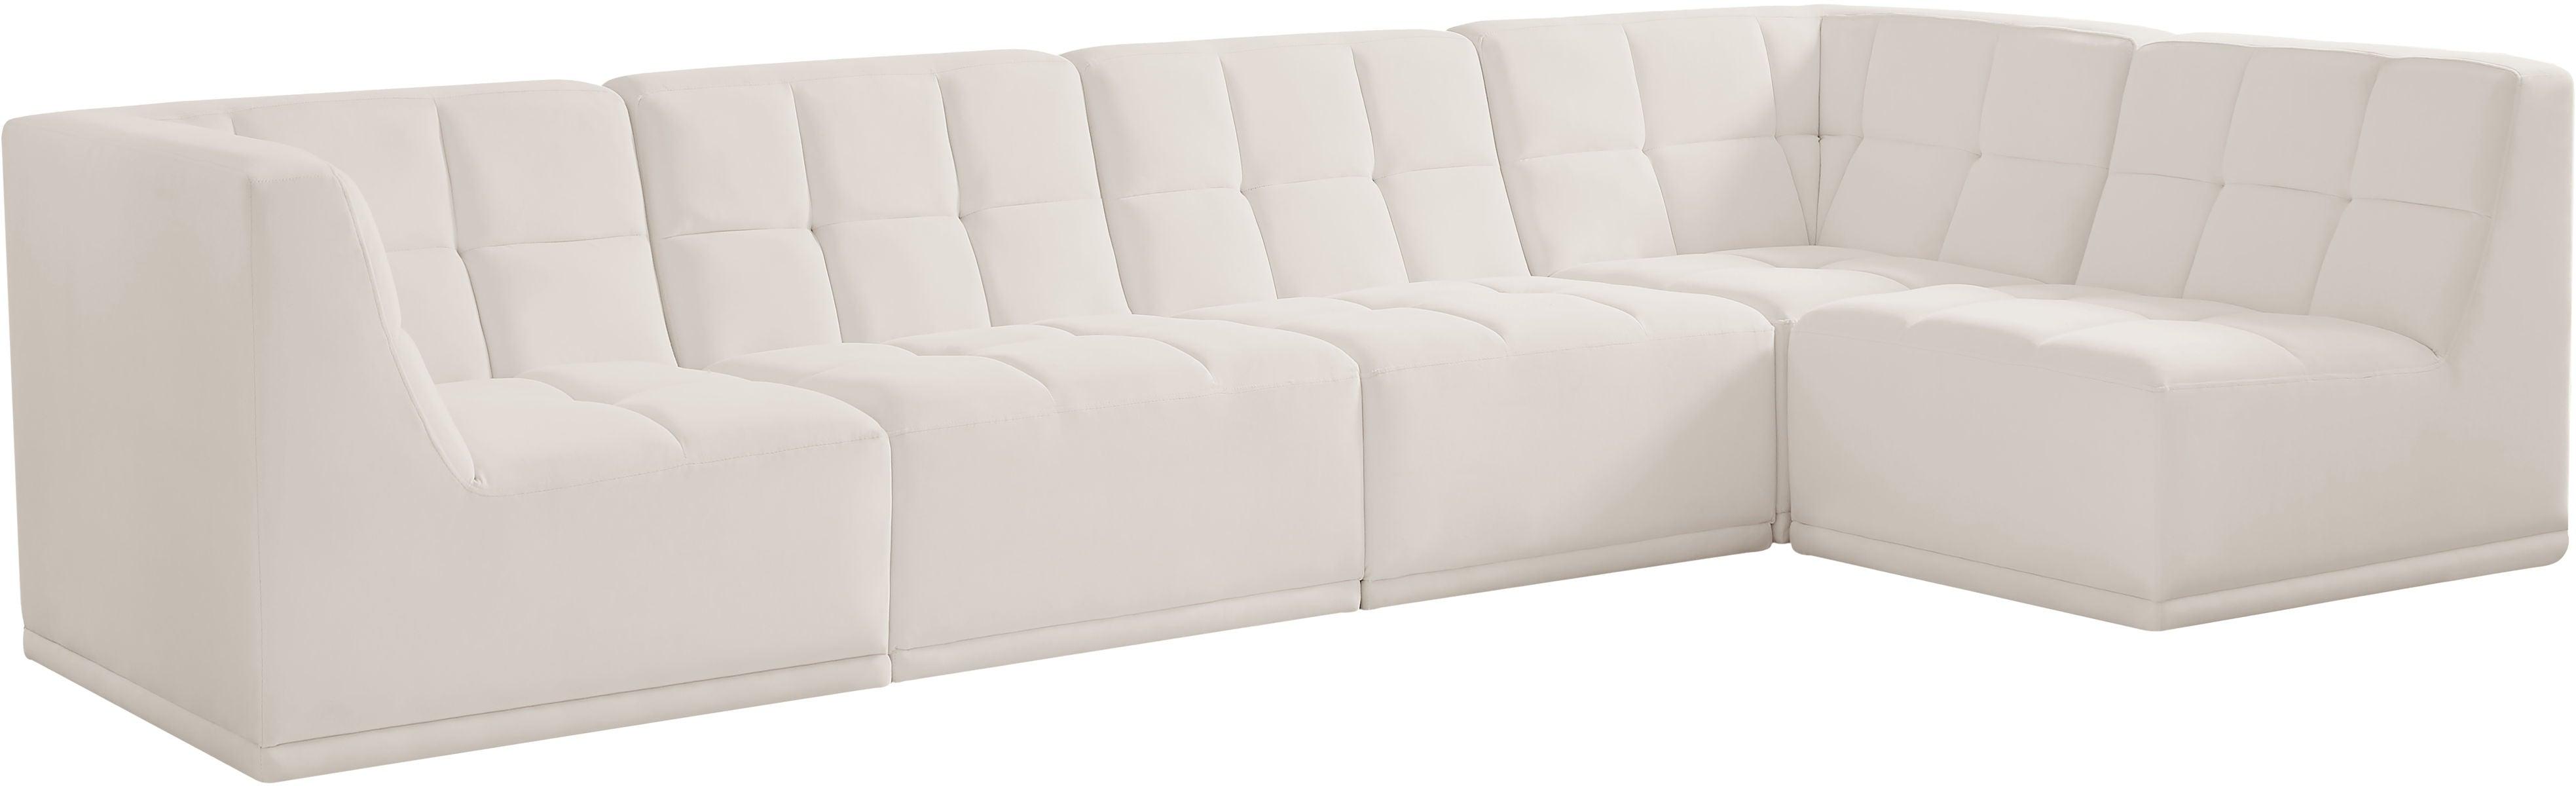 Meridian Furniture - Relax - Modular Sectional 5 Piece - Cream - Fabric - 5th Avenue Furniture